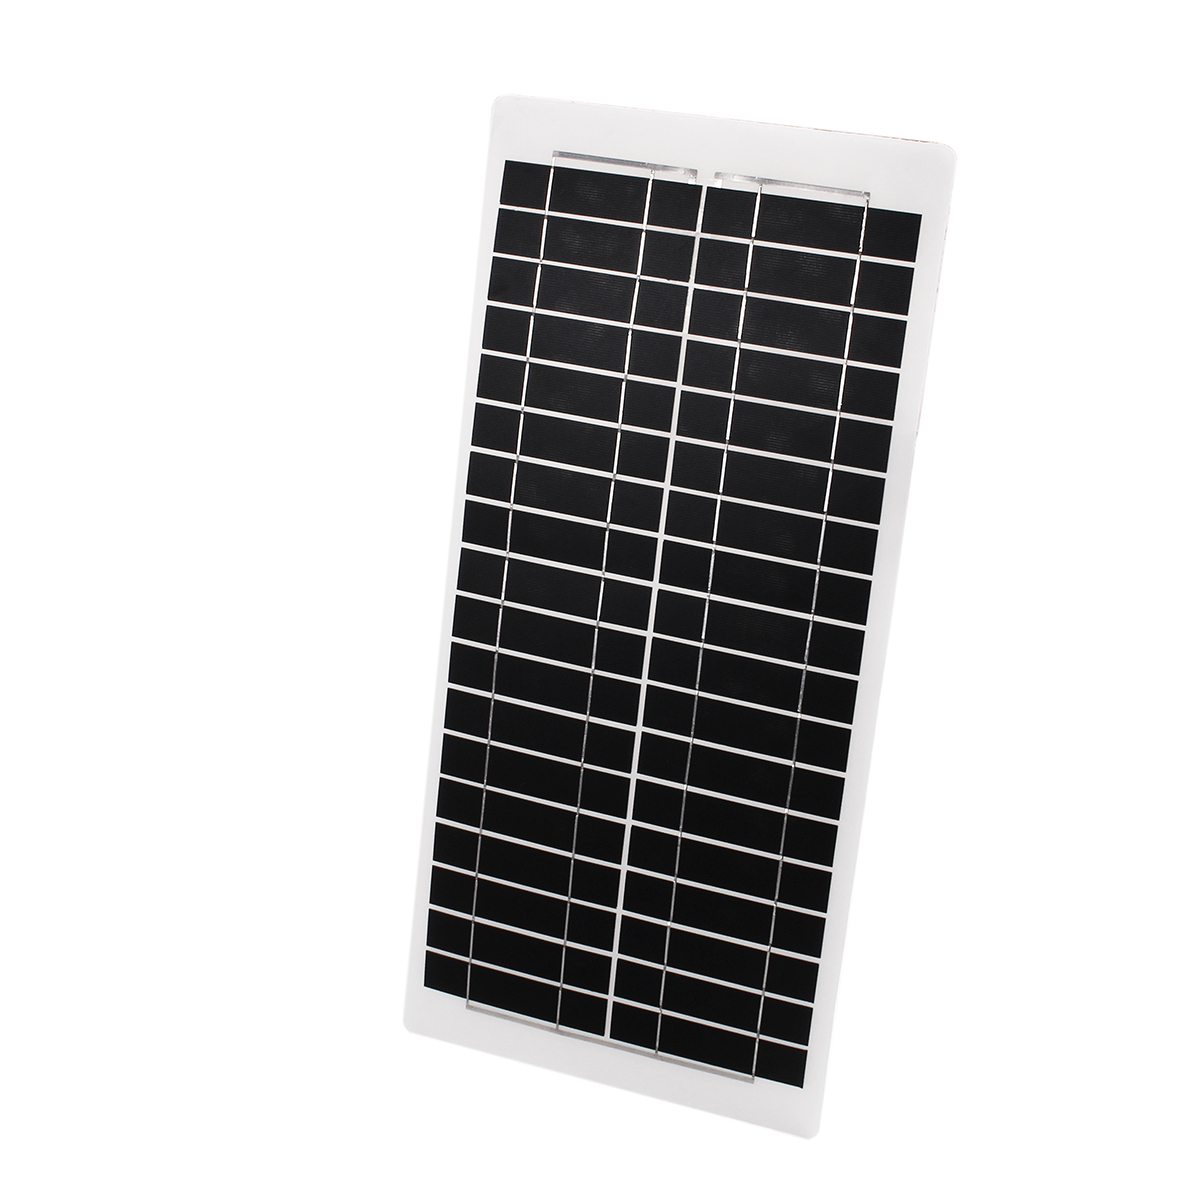 

40W 18V Power Solar Panel Monocrystalline Silicon Semi-flexible Home Electricity